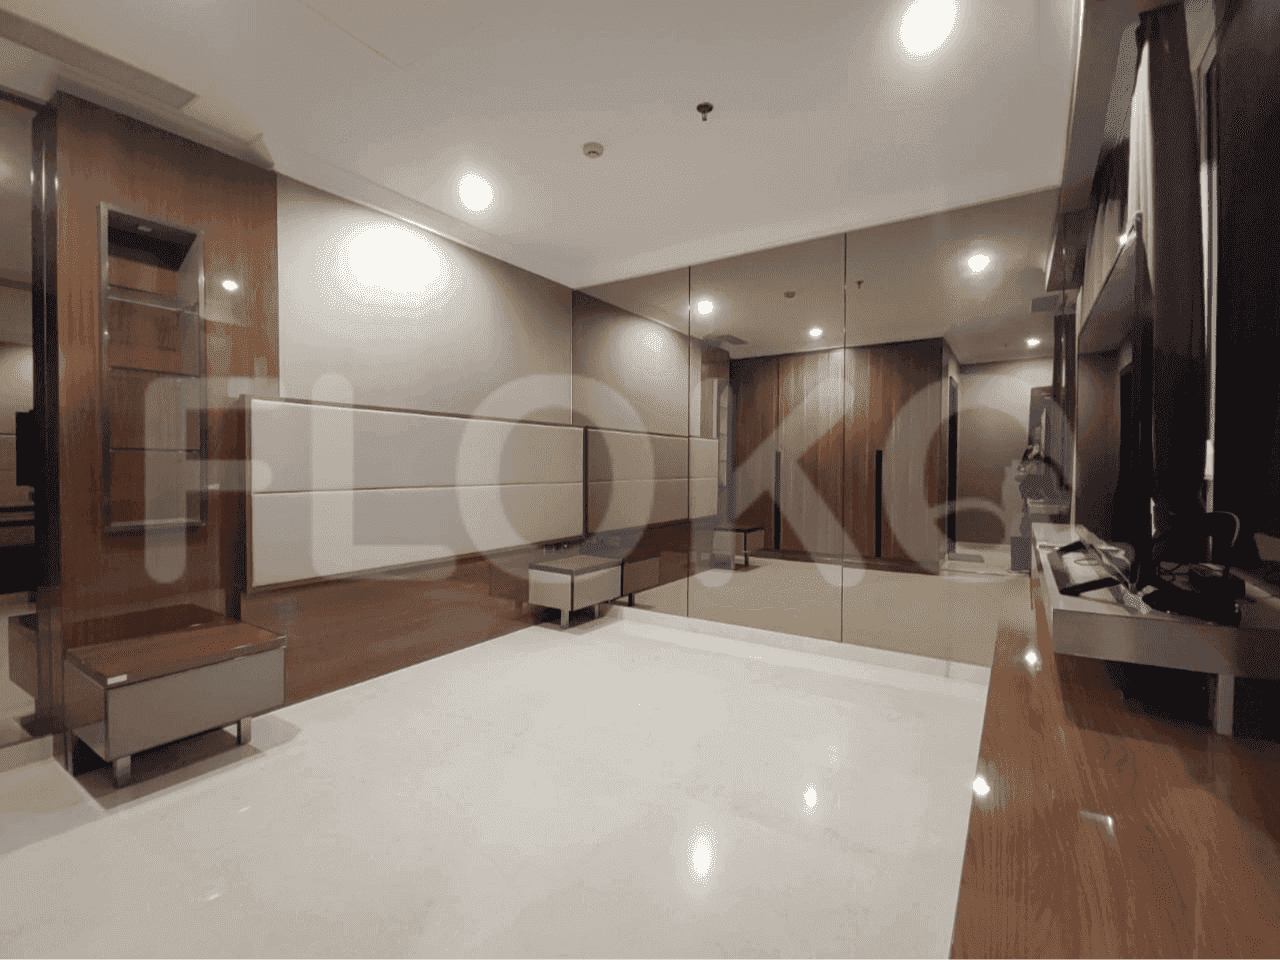 3 Bedroom on 8th Floor for Rent in Pondok Indah Residence - fpoac4 3